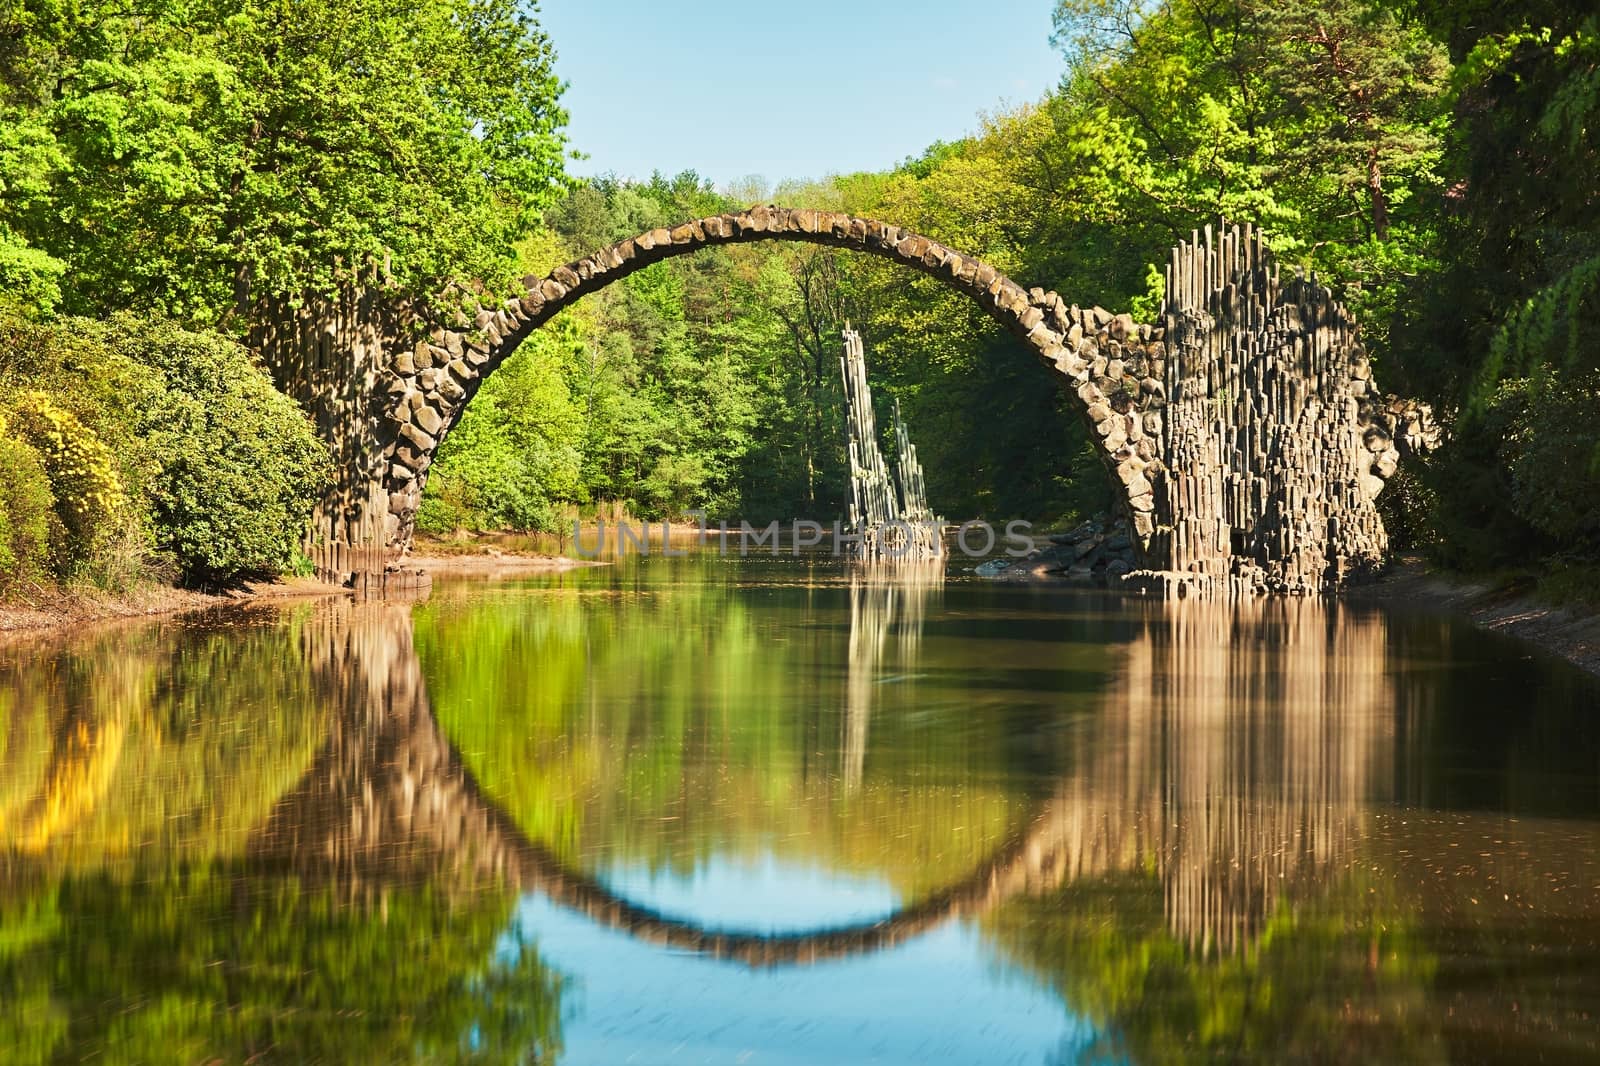 Arch bridge in Germany by Chalabala